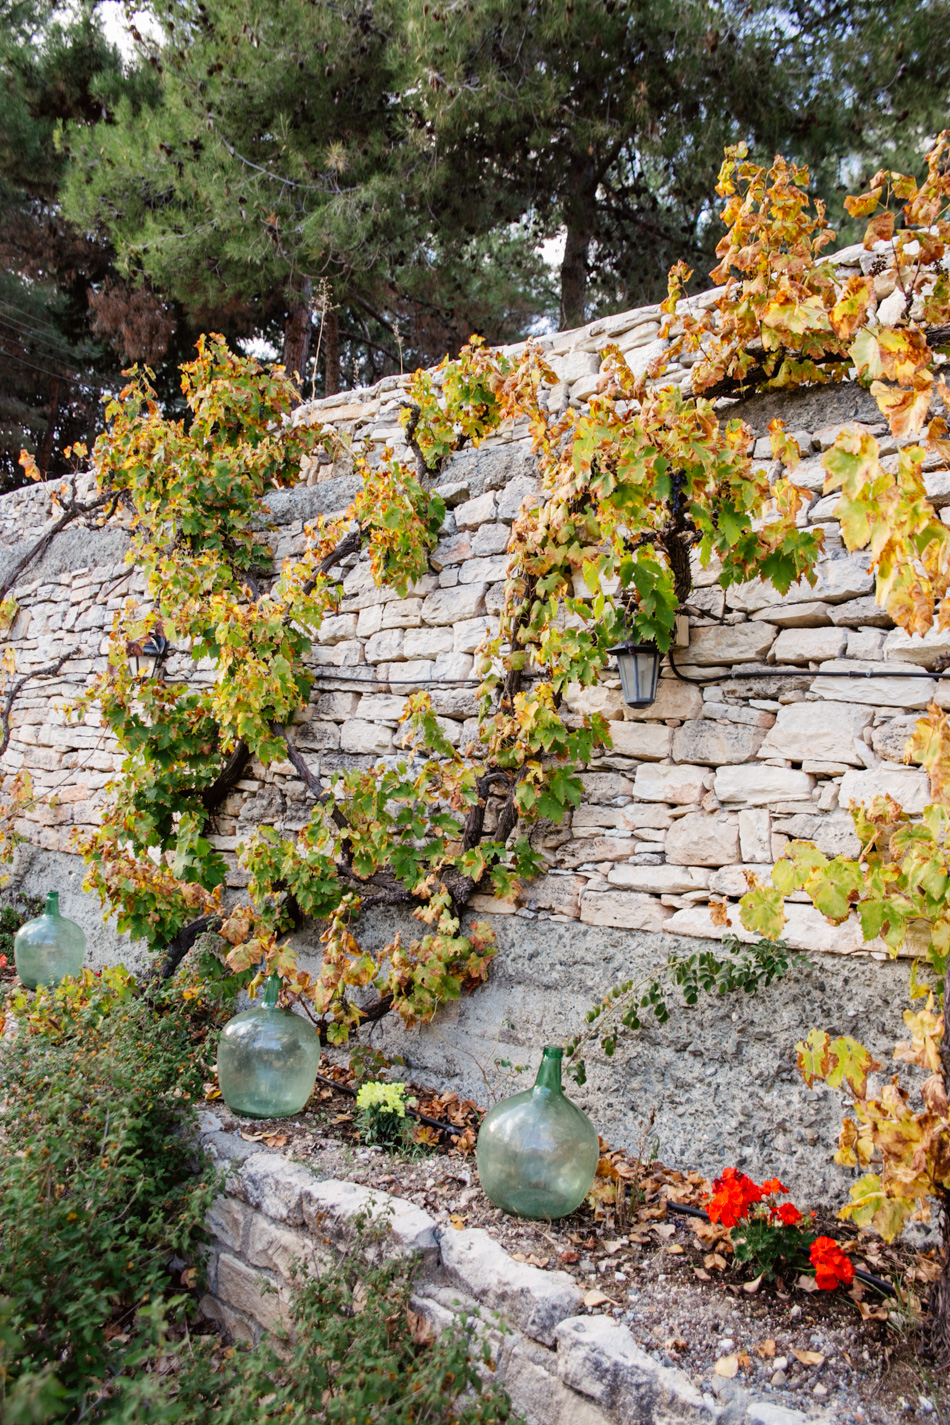 Wineries in Cyprus - Ayia Mavri Winery